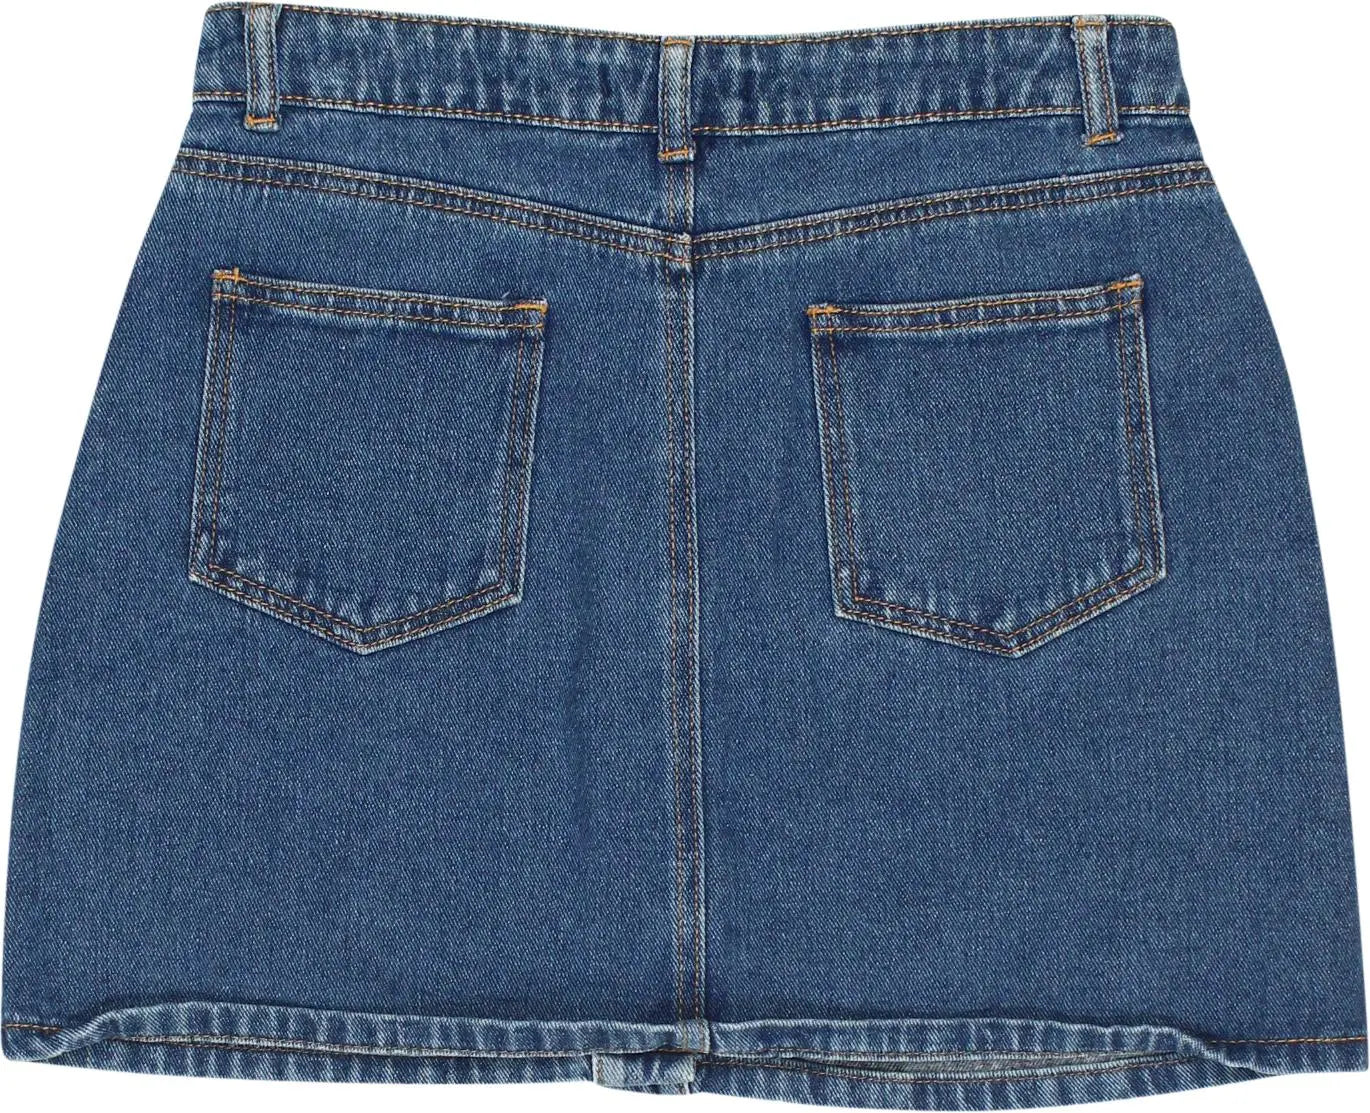 Forever 21 - Denim Skirt- ThriftTale.com - Vintage and second handclothing